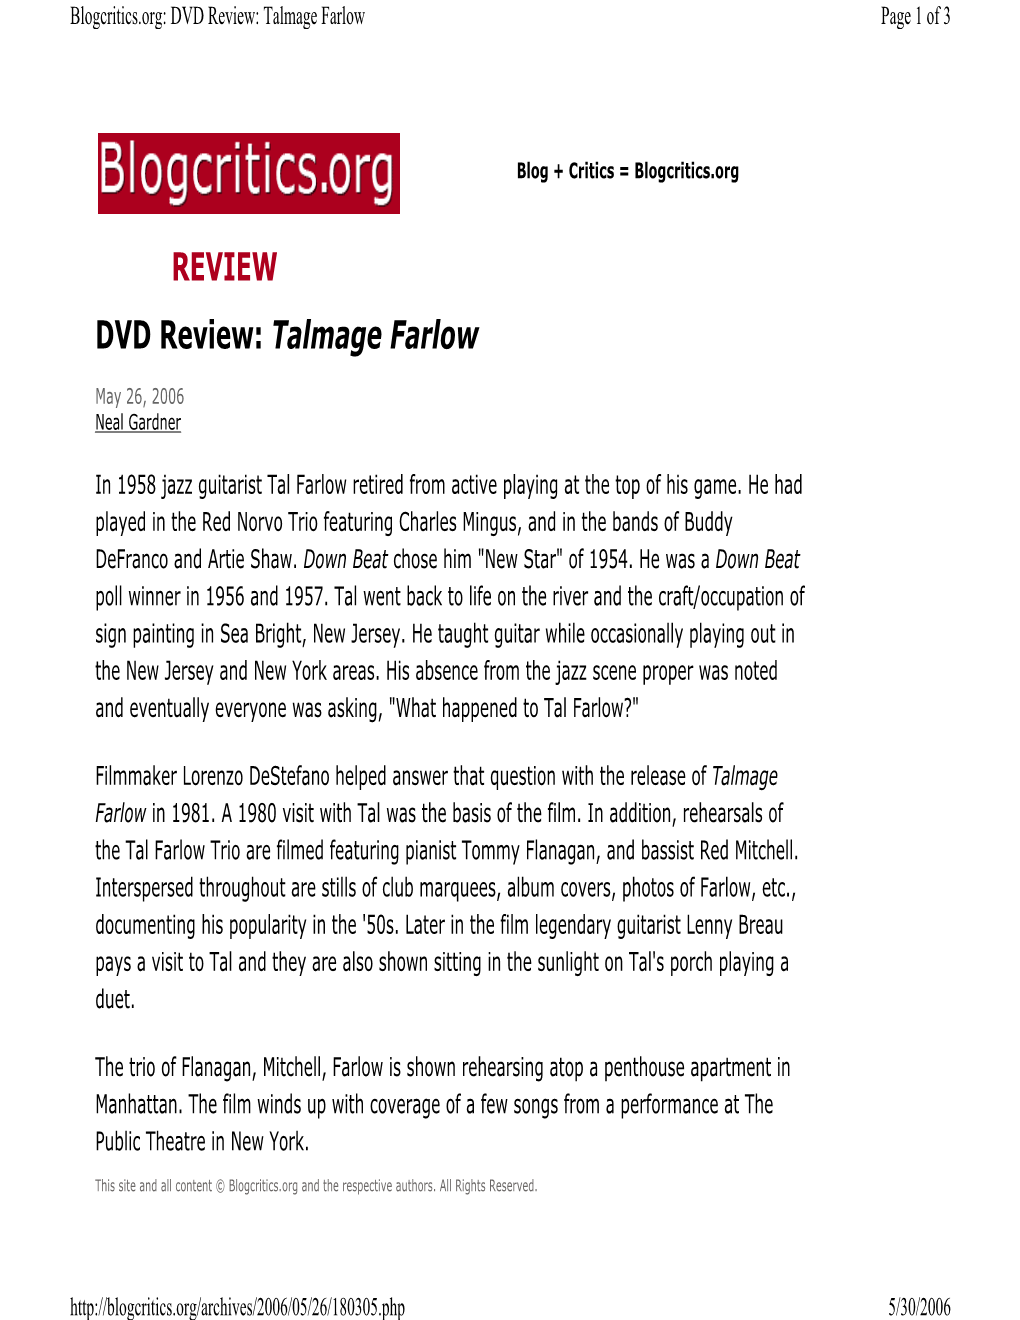 DVD Review: Talmage Farlow REVIEW